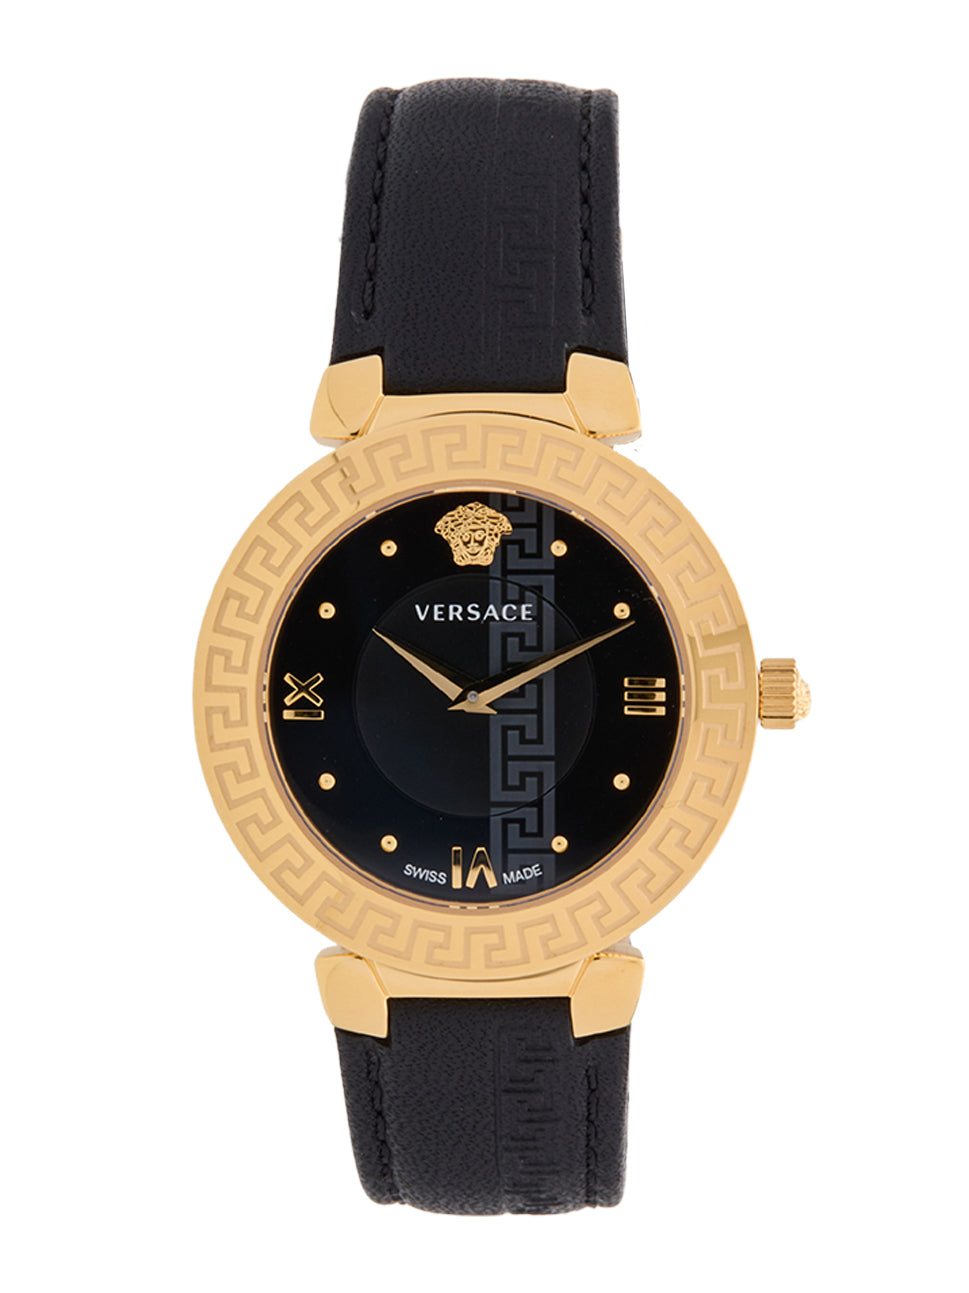 Versace Women's Daphnis Watch Black/Gold 35mm V16050017